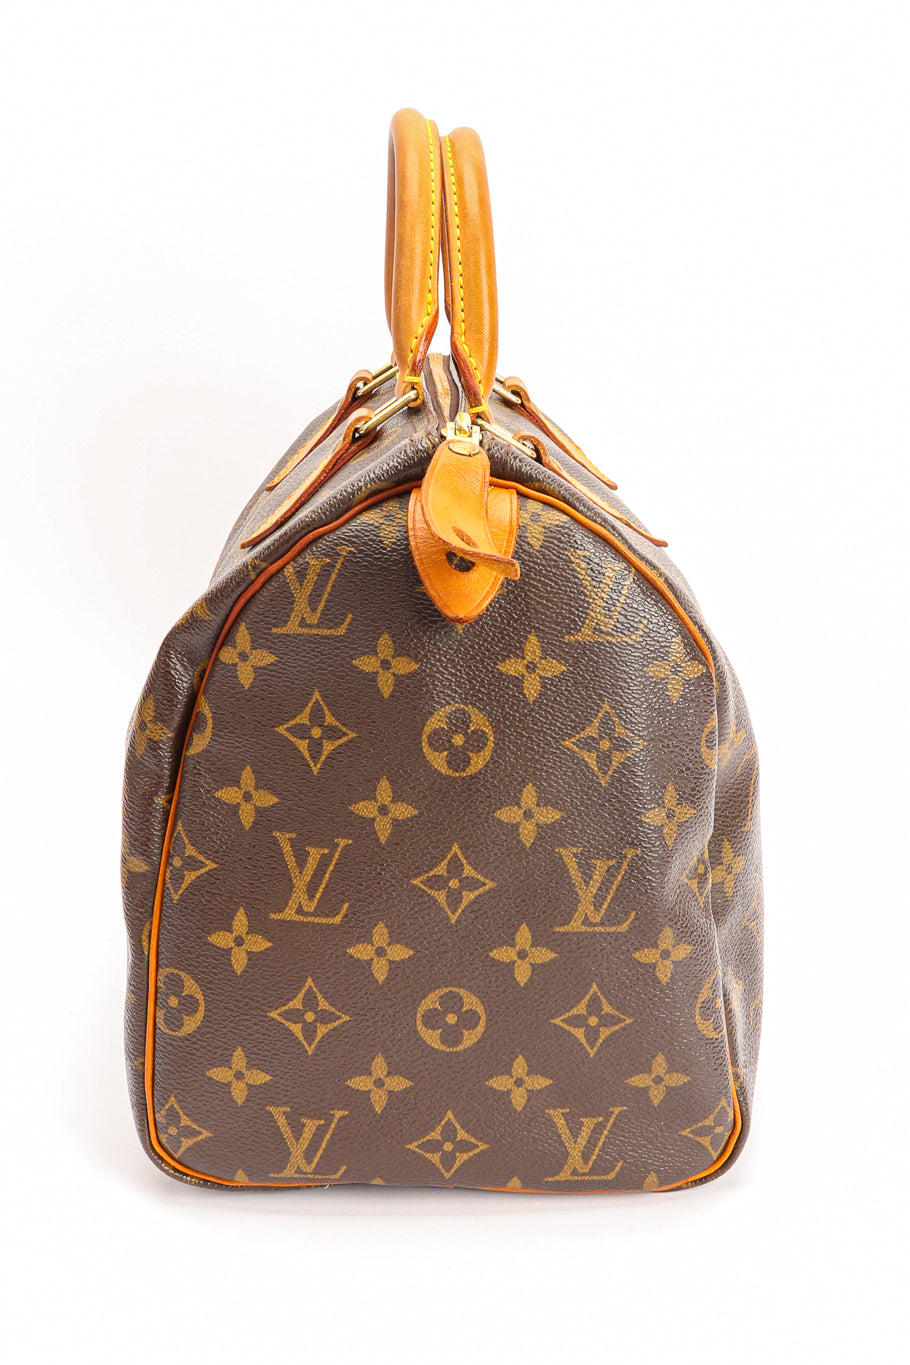 Vintage Louis Vuitton Classic Monogram Speedy 30 Bag III side view @Recessla